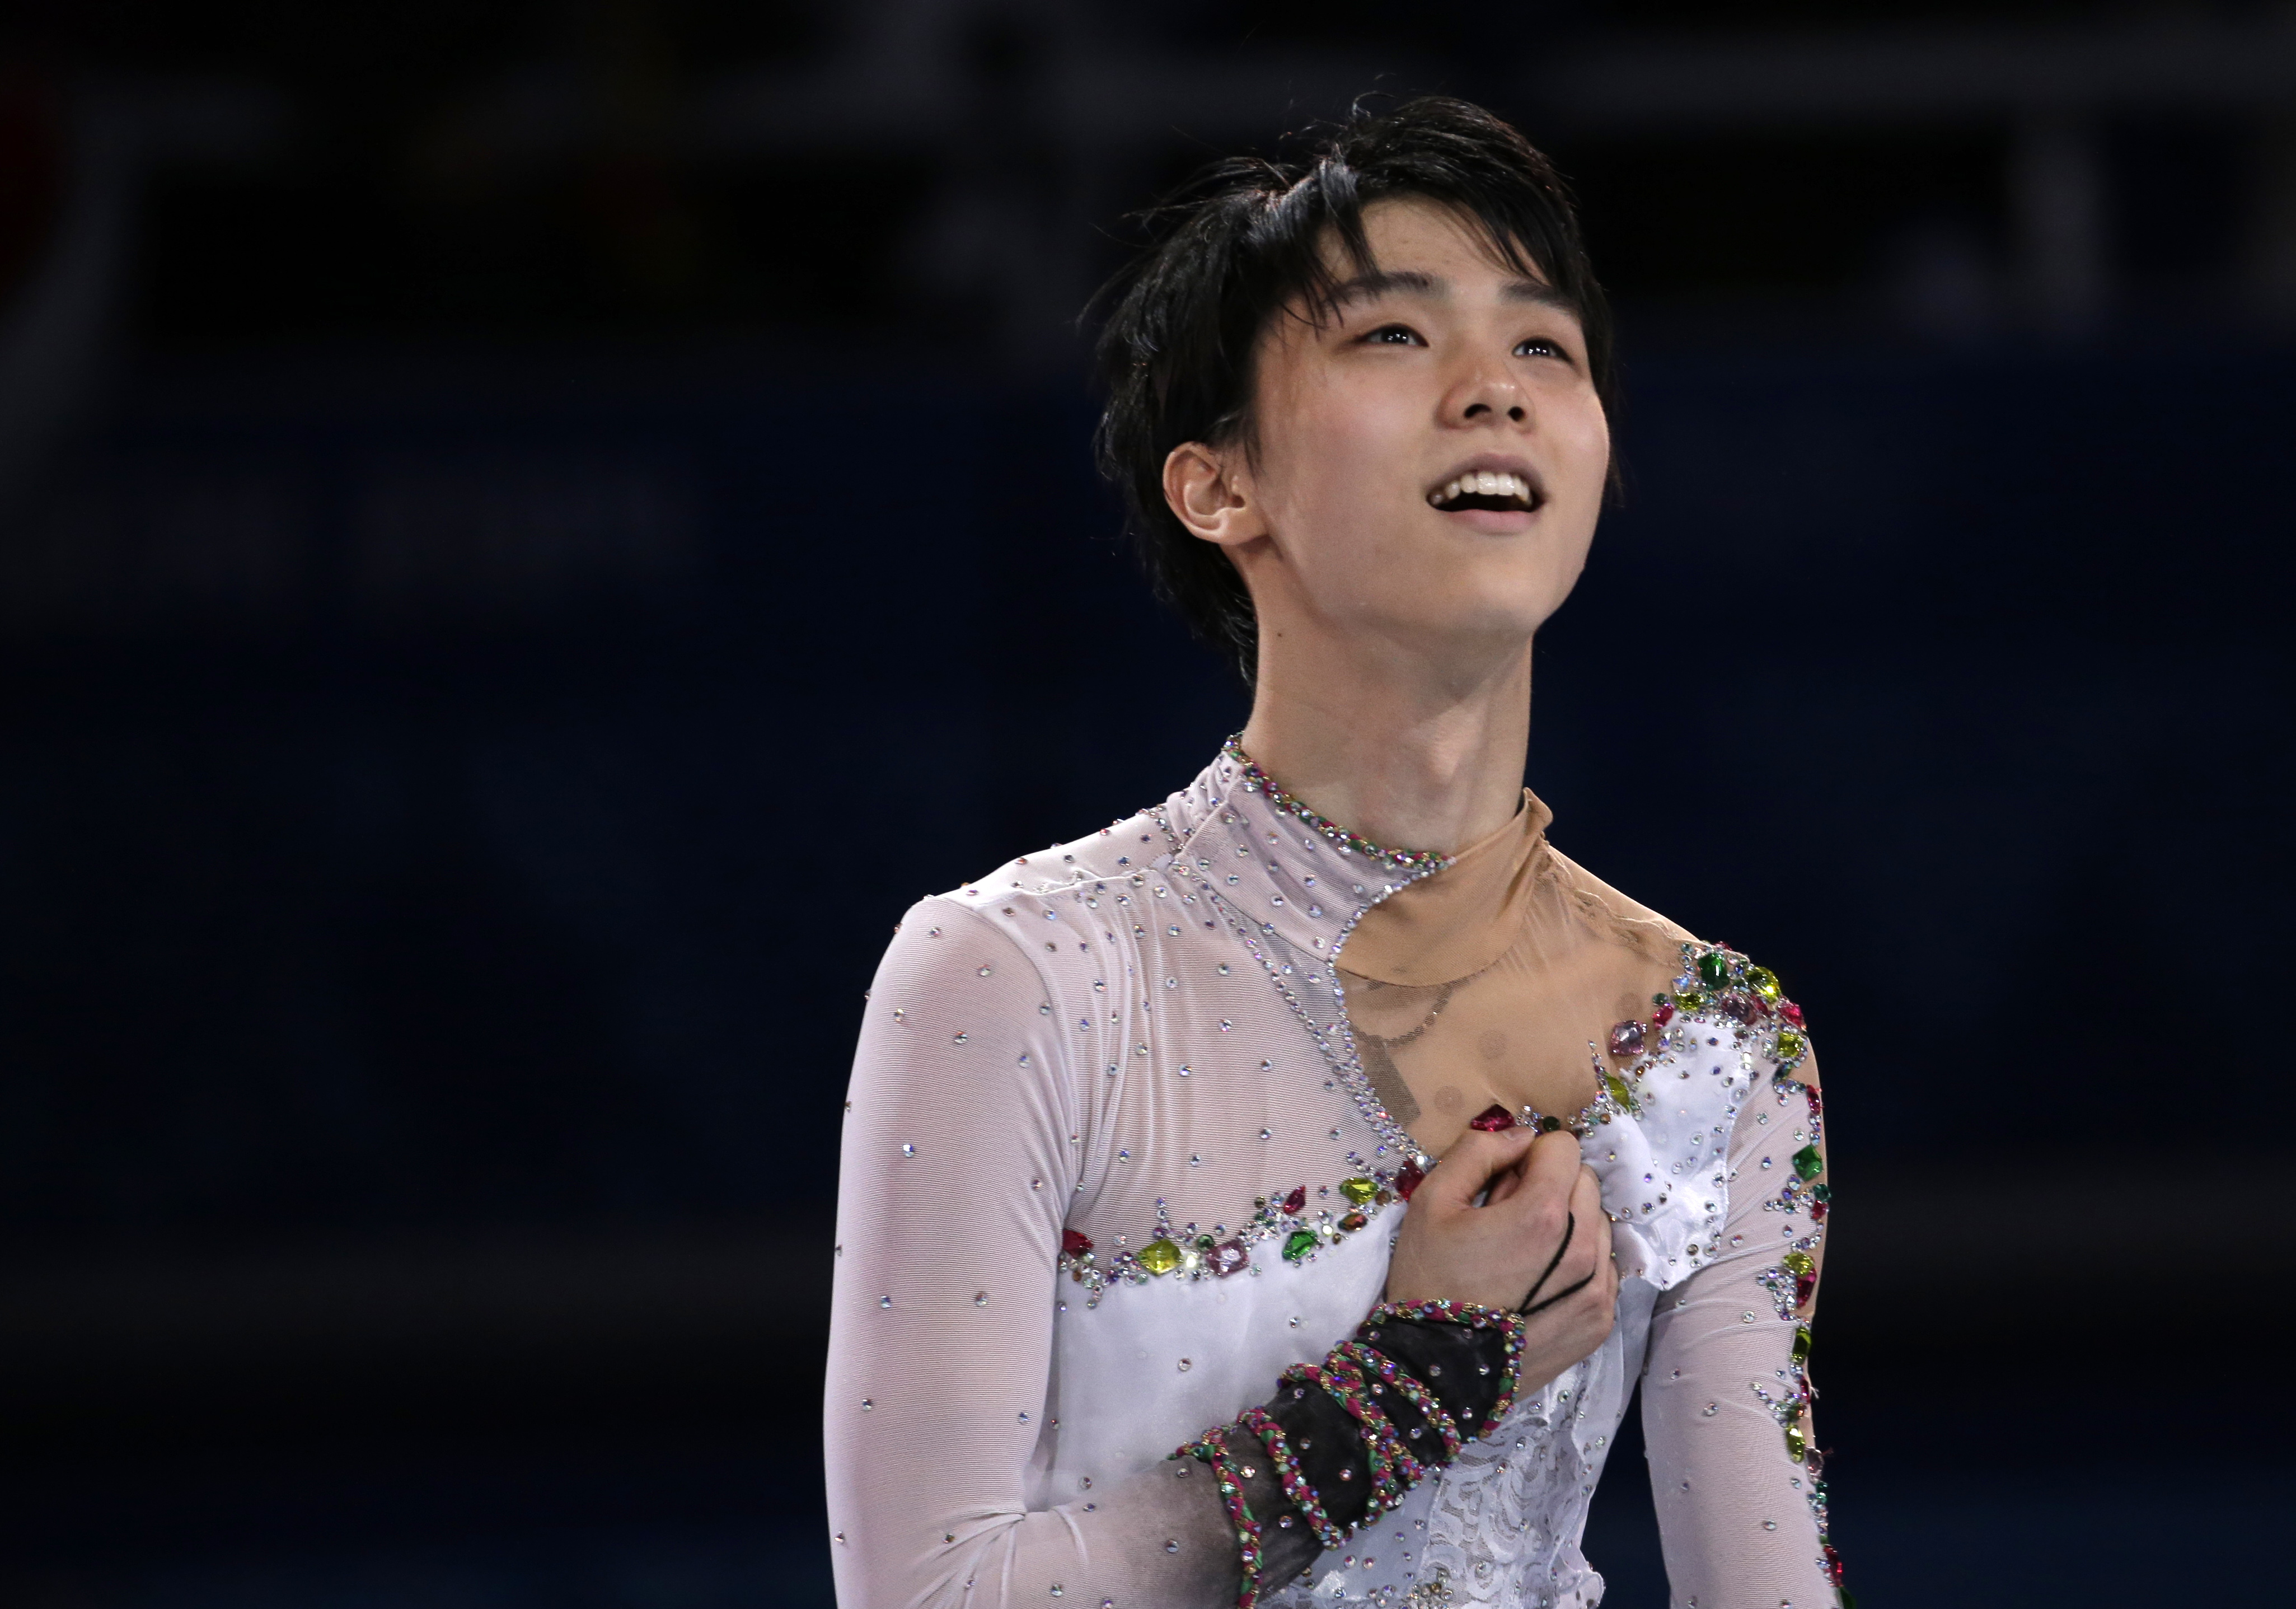 Winter Olympics 2014: Yuzuru Hanyu of Japan survives two falls to win  figure skating gold - CBS News